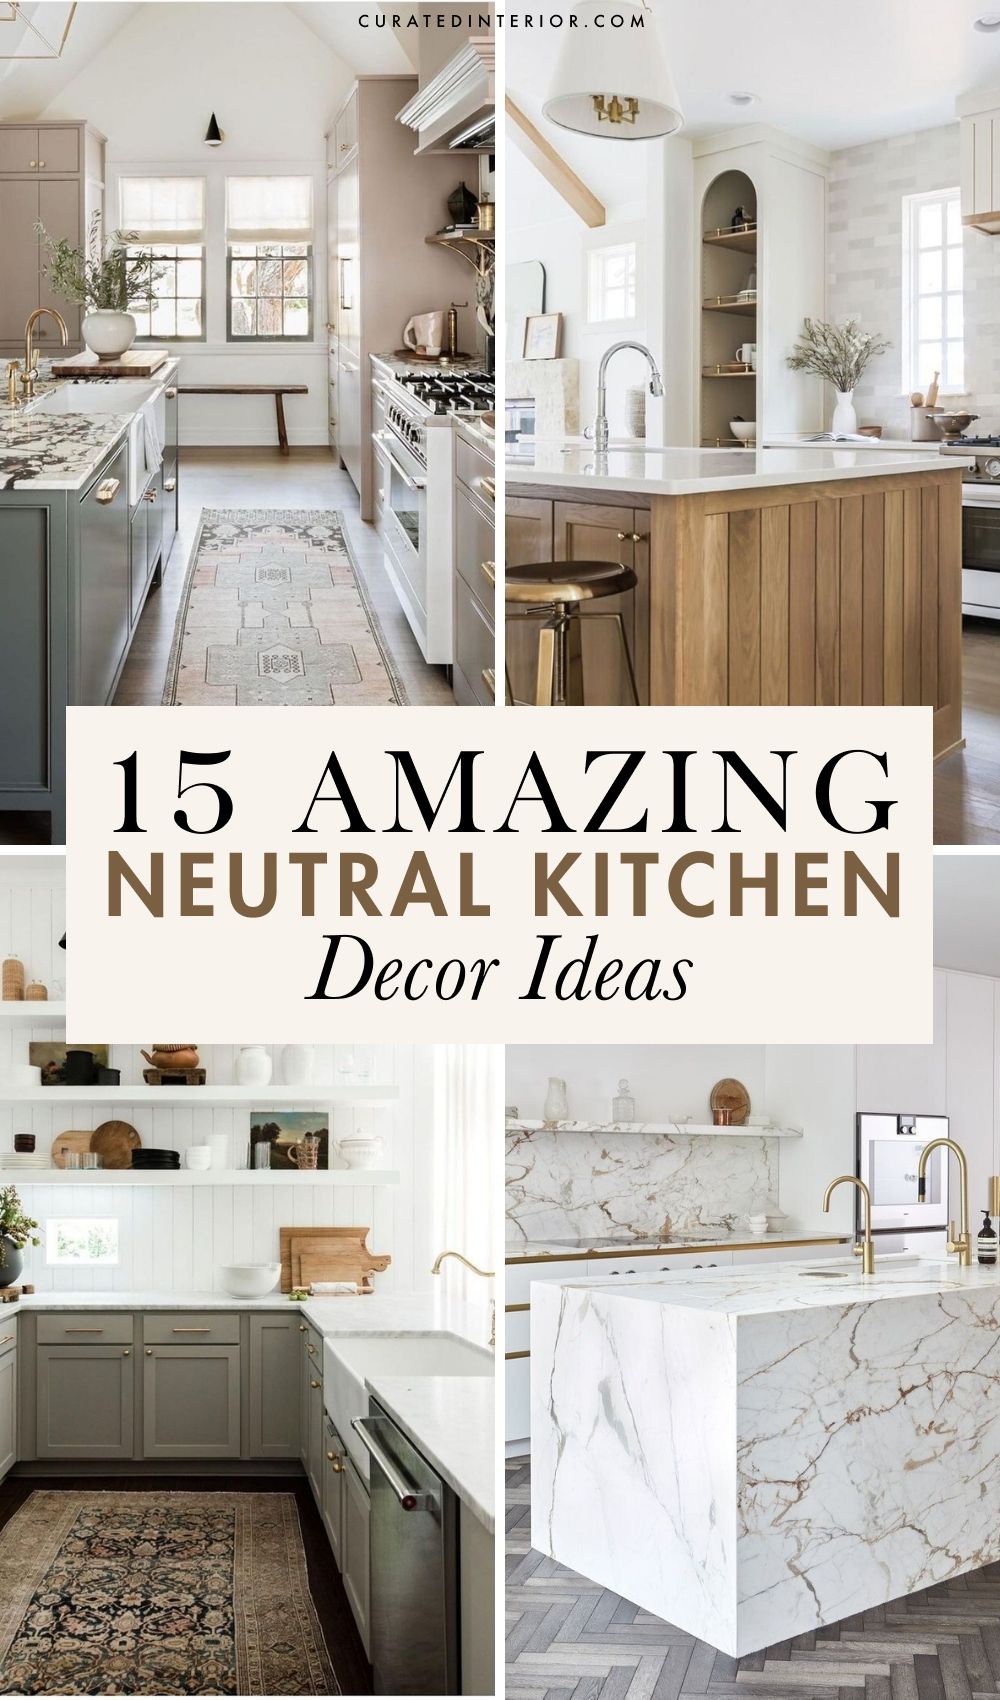 https://curatedinterior.com/wp-content/uploads/2021/01/15-amazing-neutral-kitchen-decorating-ideas.jpg